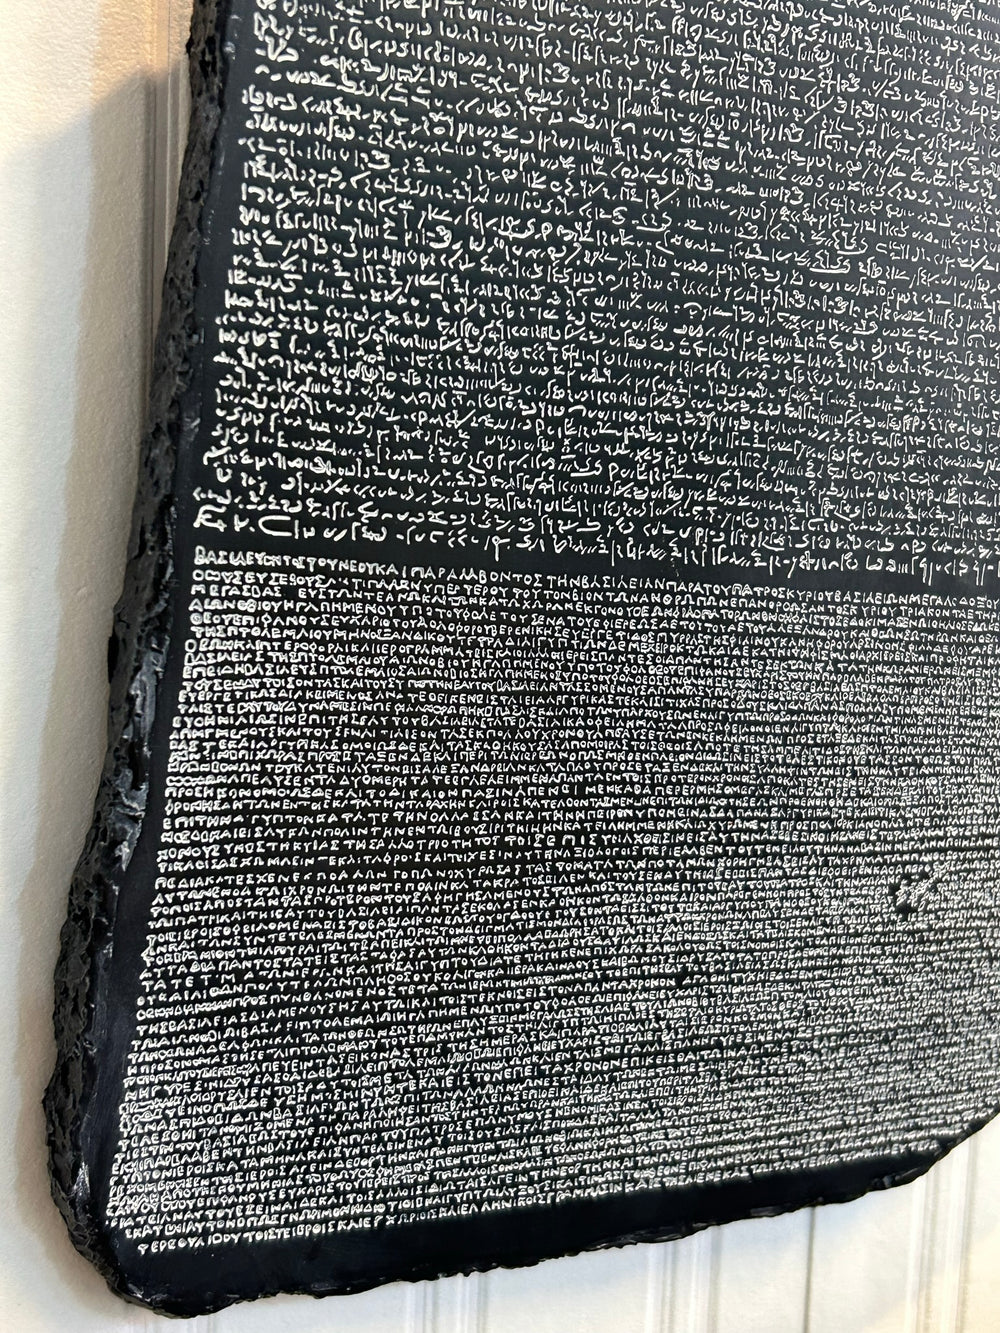 Rosetta Stone Plaque, ancient Egyptian hieroglyphs